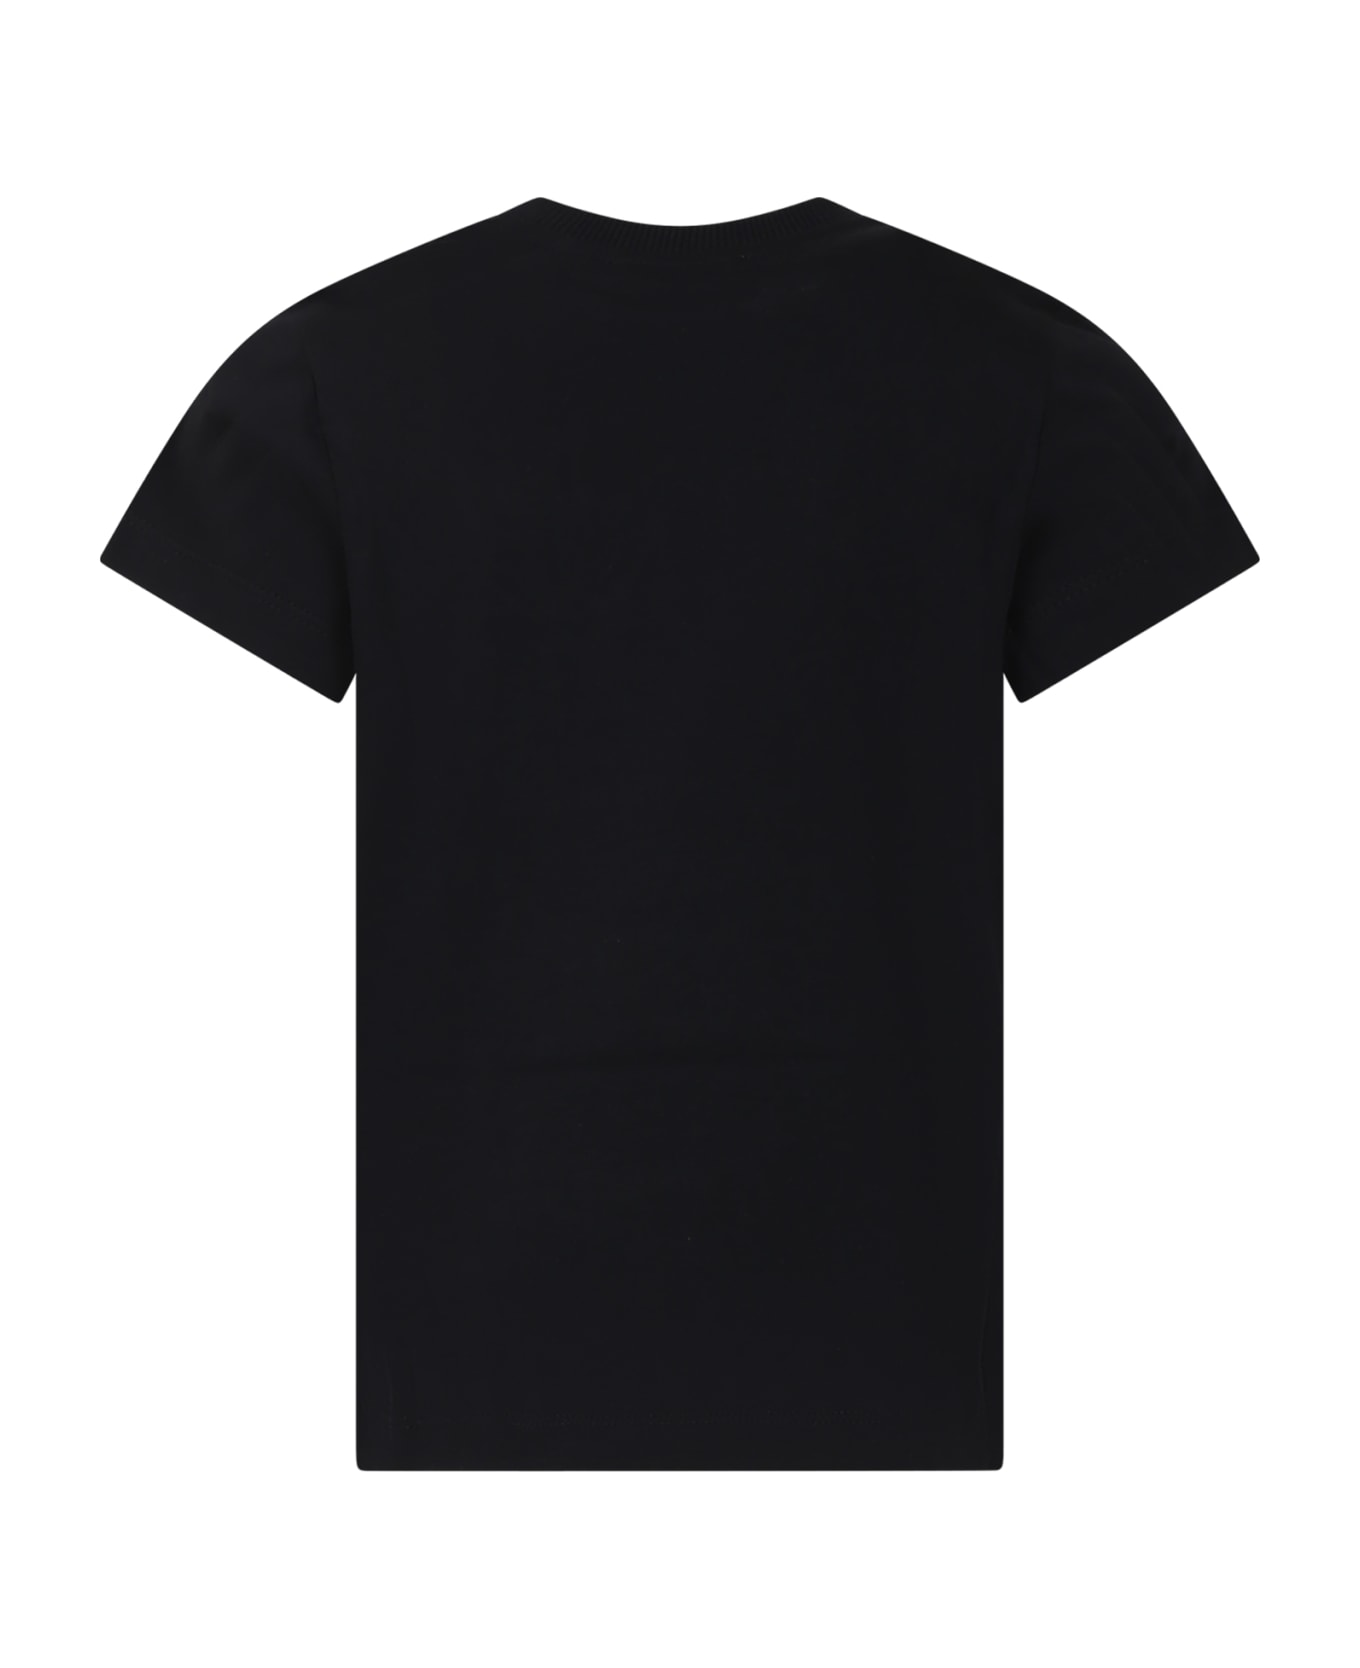 Moschino Black T-shirt For Kids With Teddy Bears Print - Black